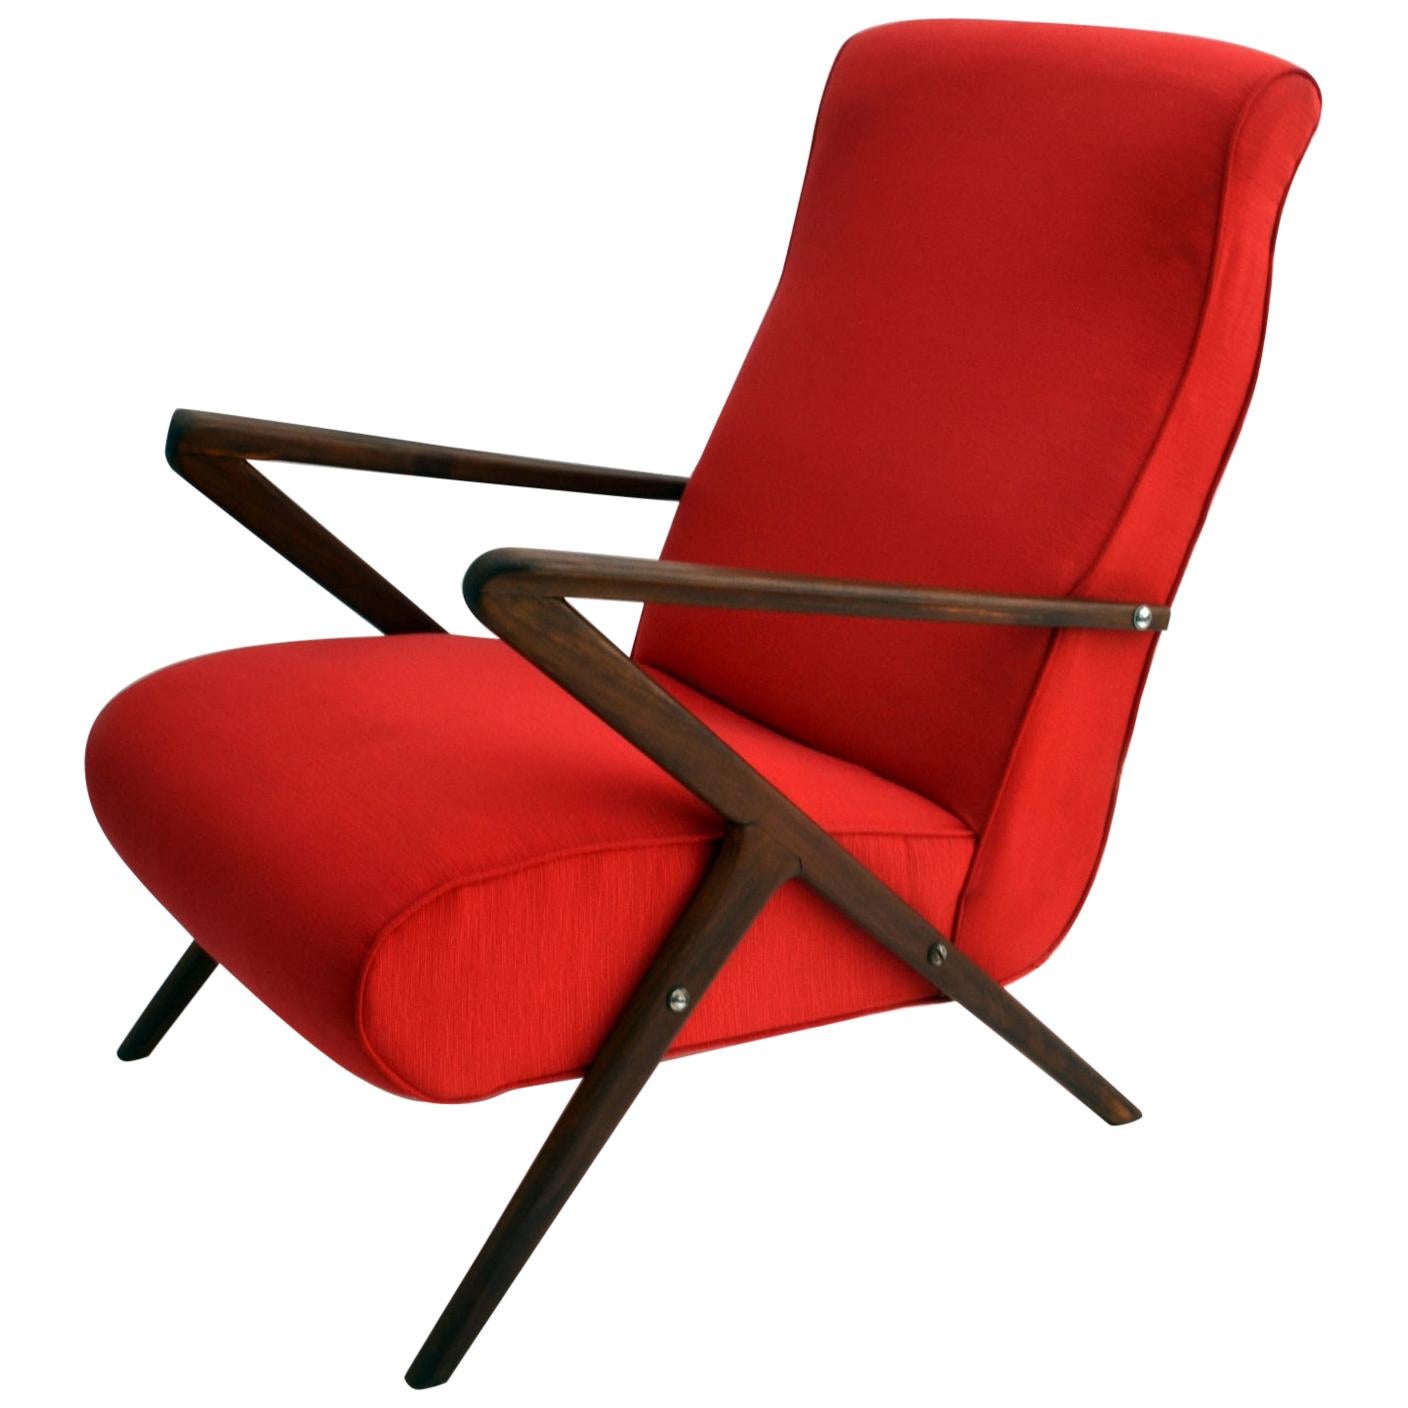 Roter italienischer Mahagoni-Sessel aus den 1950er Jahren